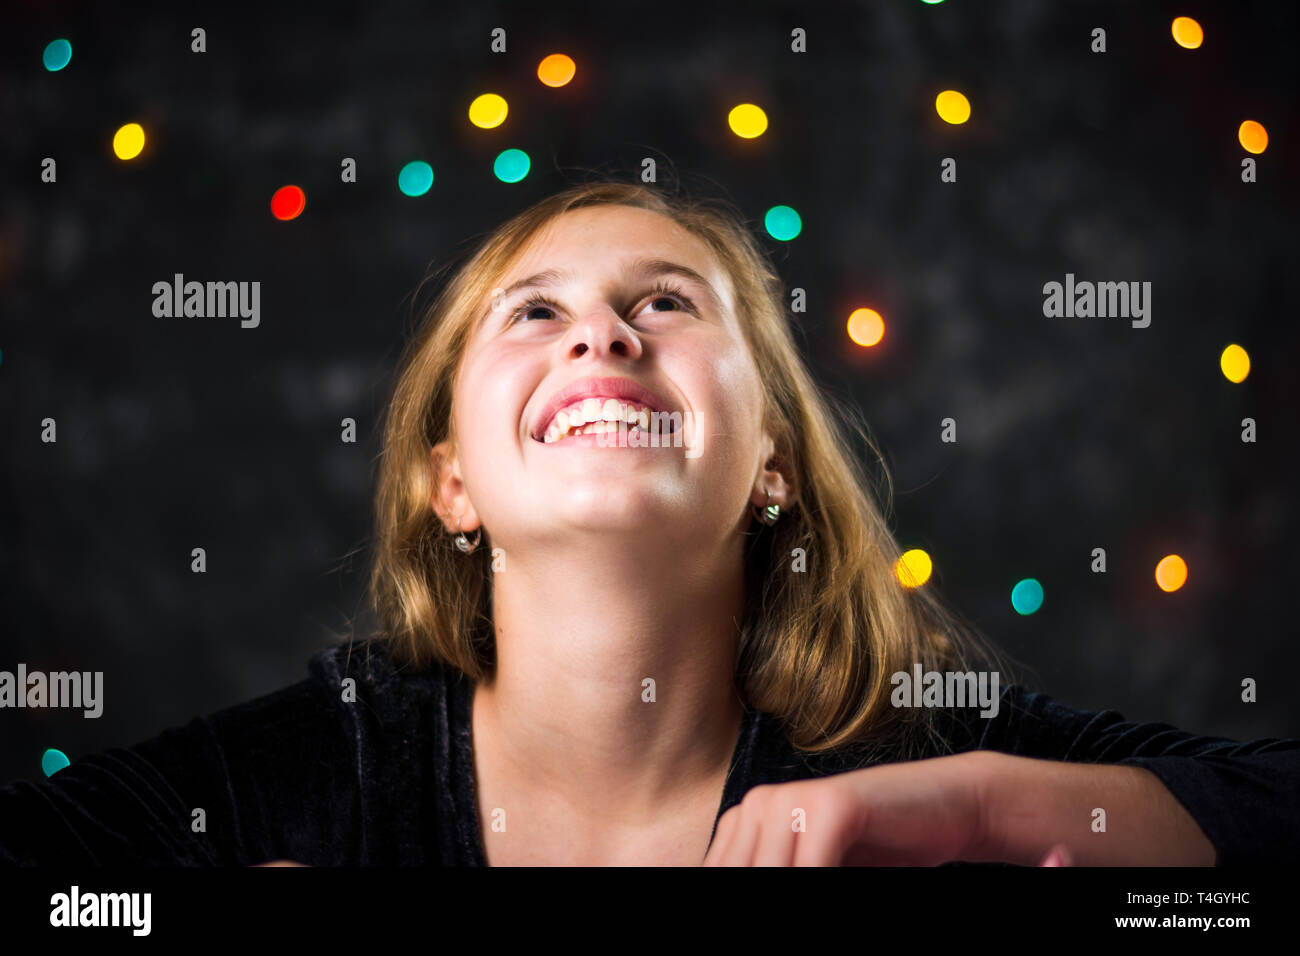 Portrait of cheerful teenage girl against festive background Stock Photo